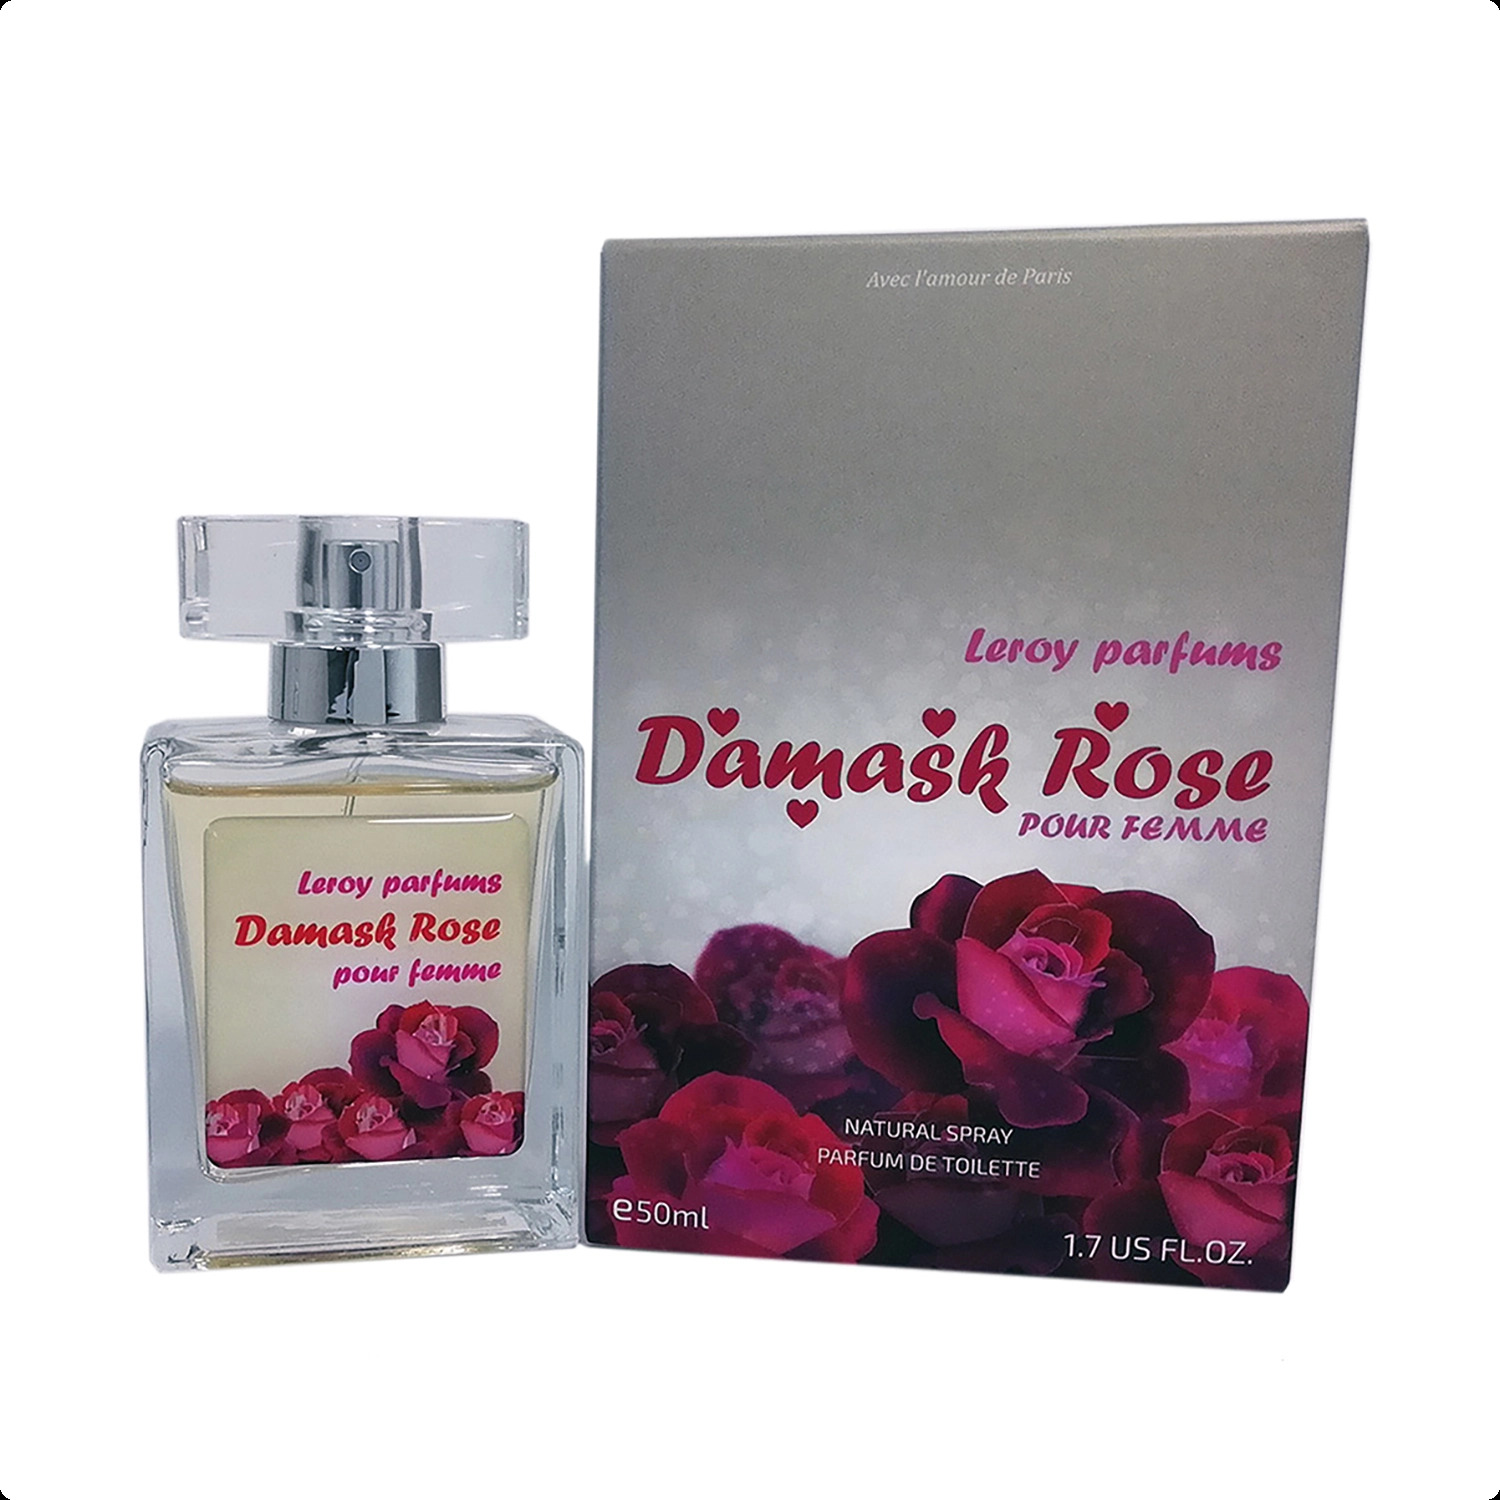 Леруа парфюмс Дамасская роза для женщин